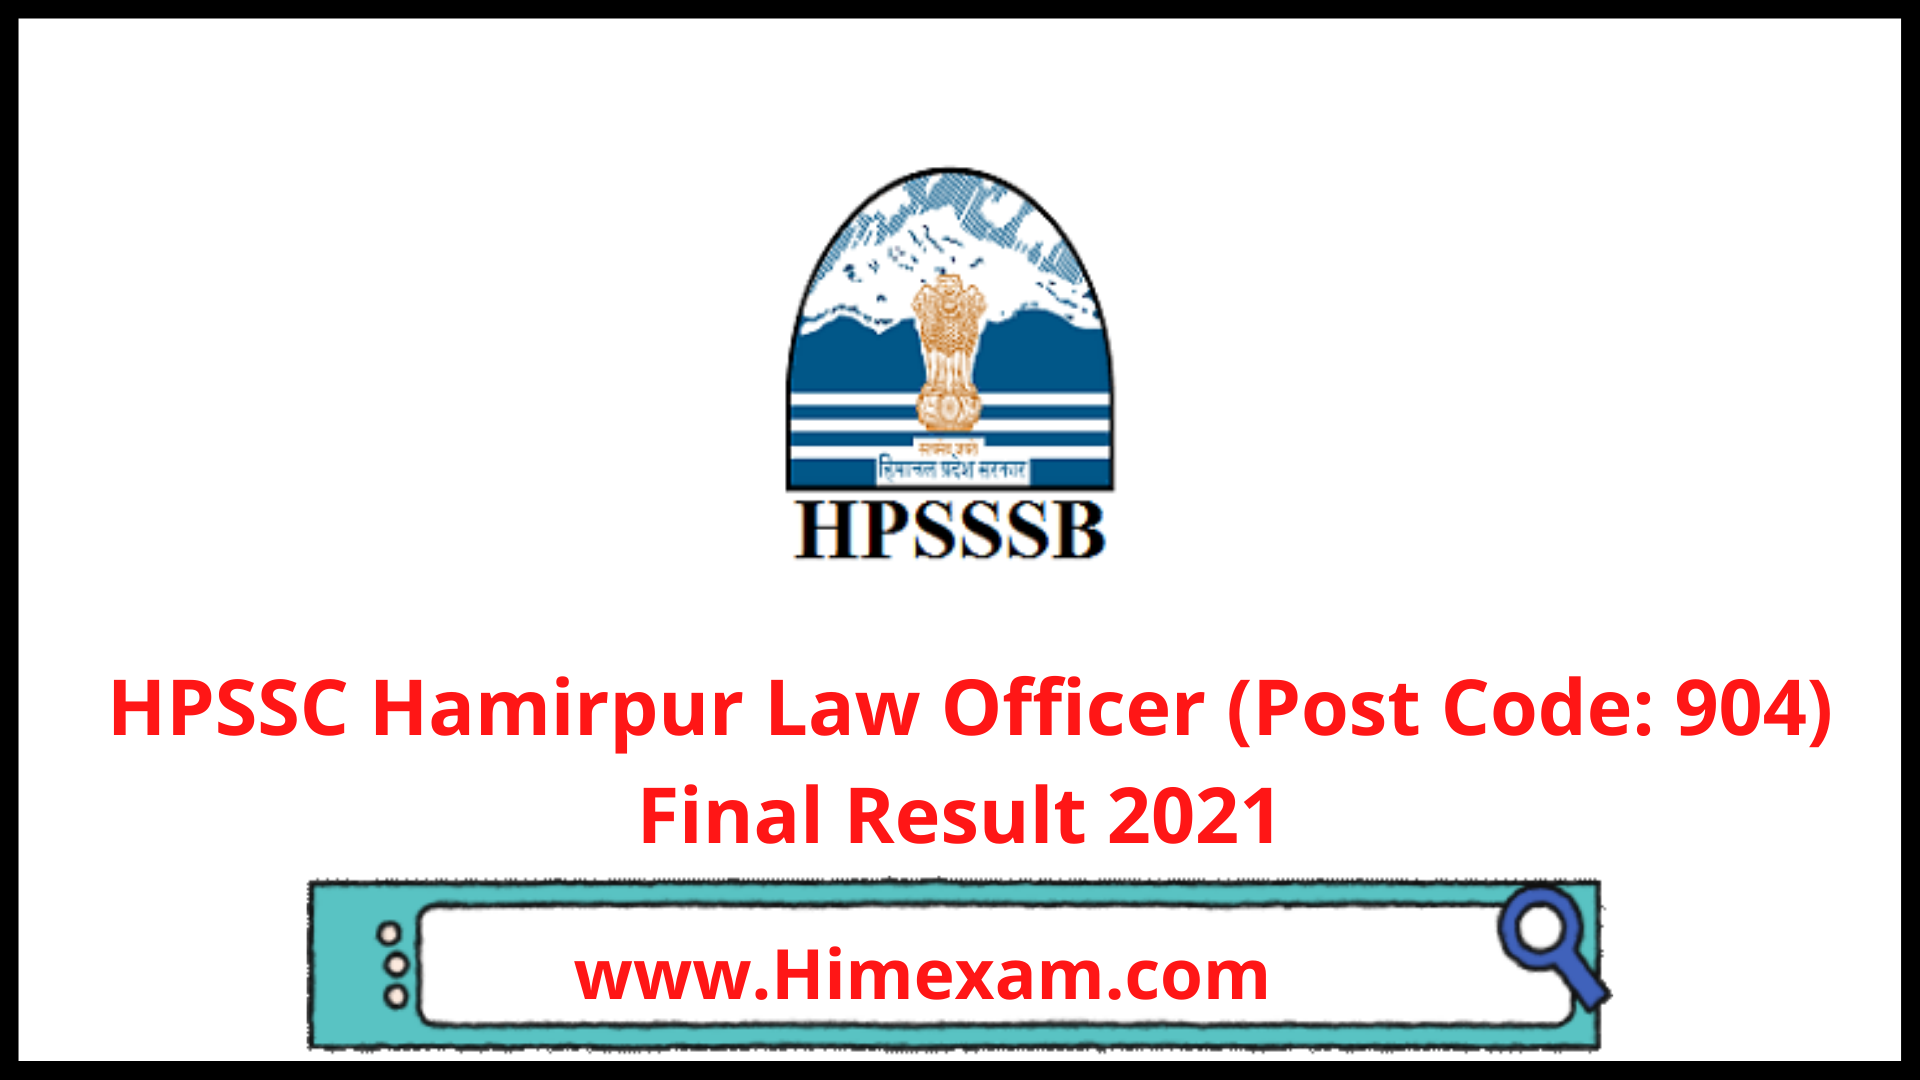 HPSSC Hamirpur Law Officer (Post Code: 904) Final Result 2021